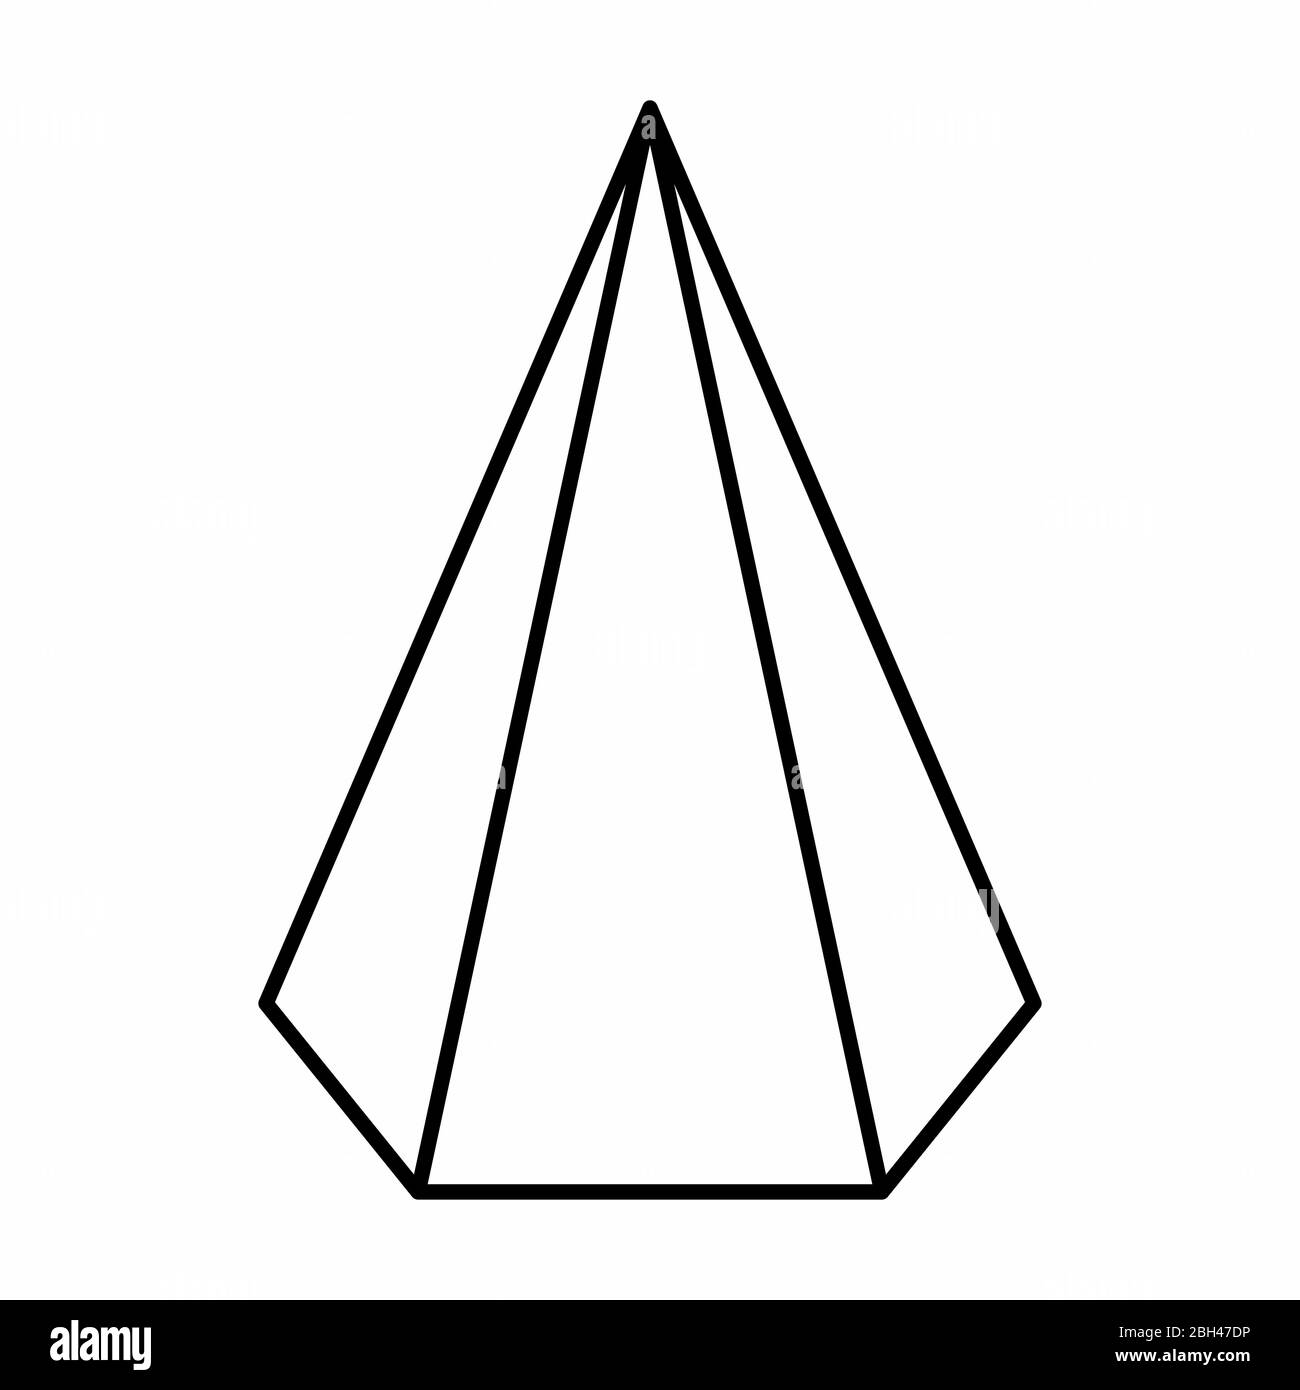 Hexagonal pyramid linear icon illustration on white background Stock Vector